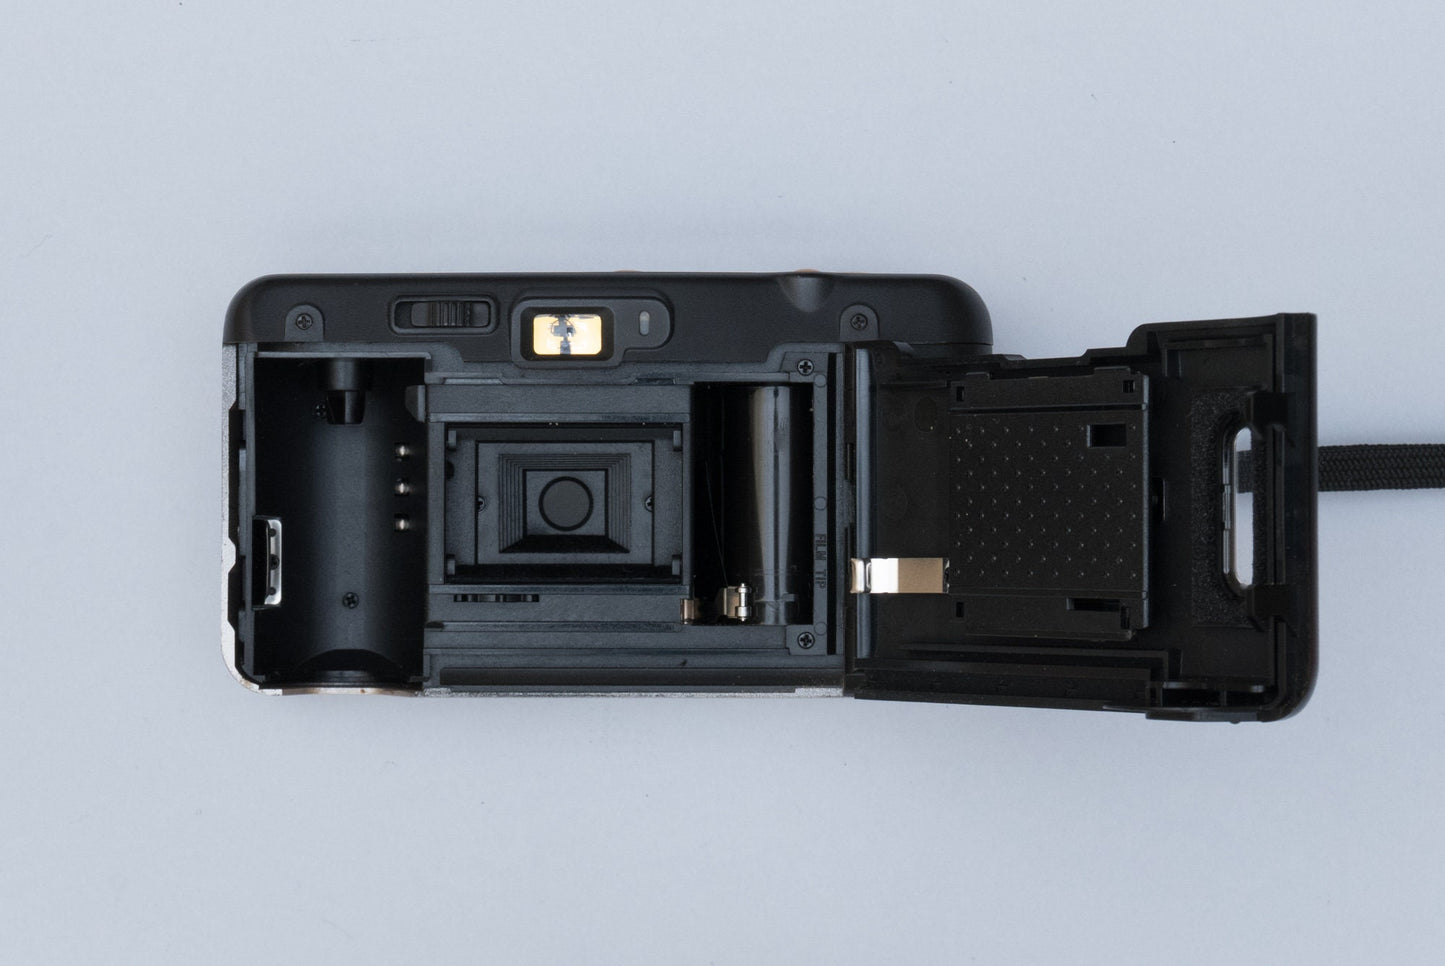 Voigtlander Vitolux Comfort AF Point and Shoot 35mm Compact Film Camera